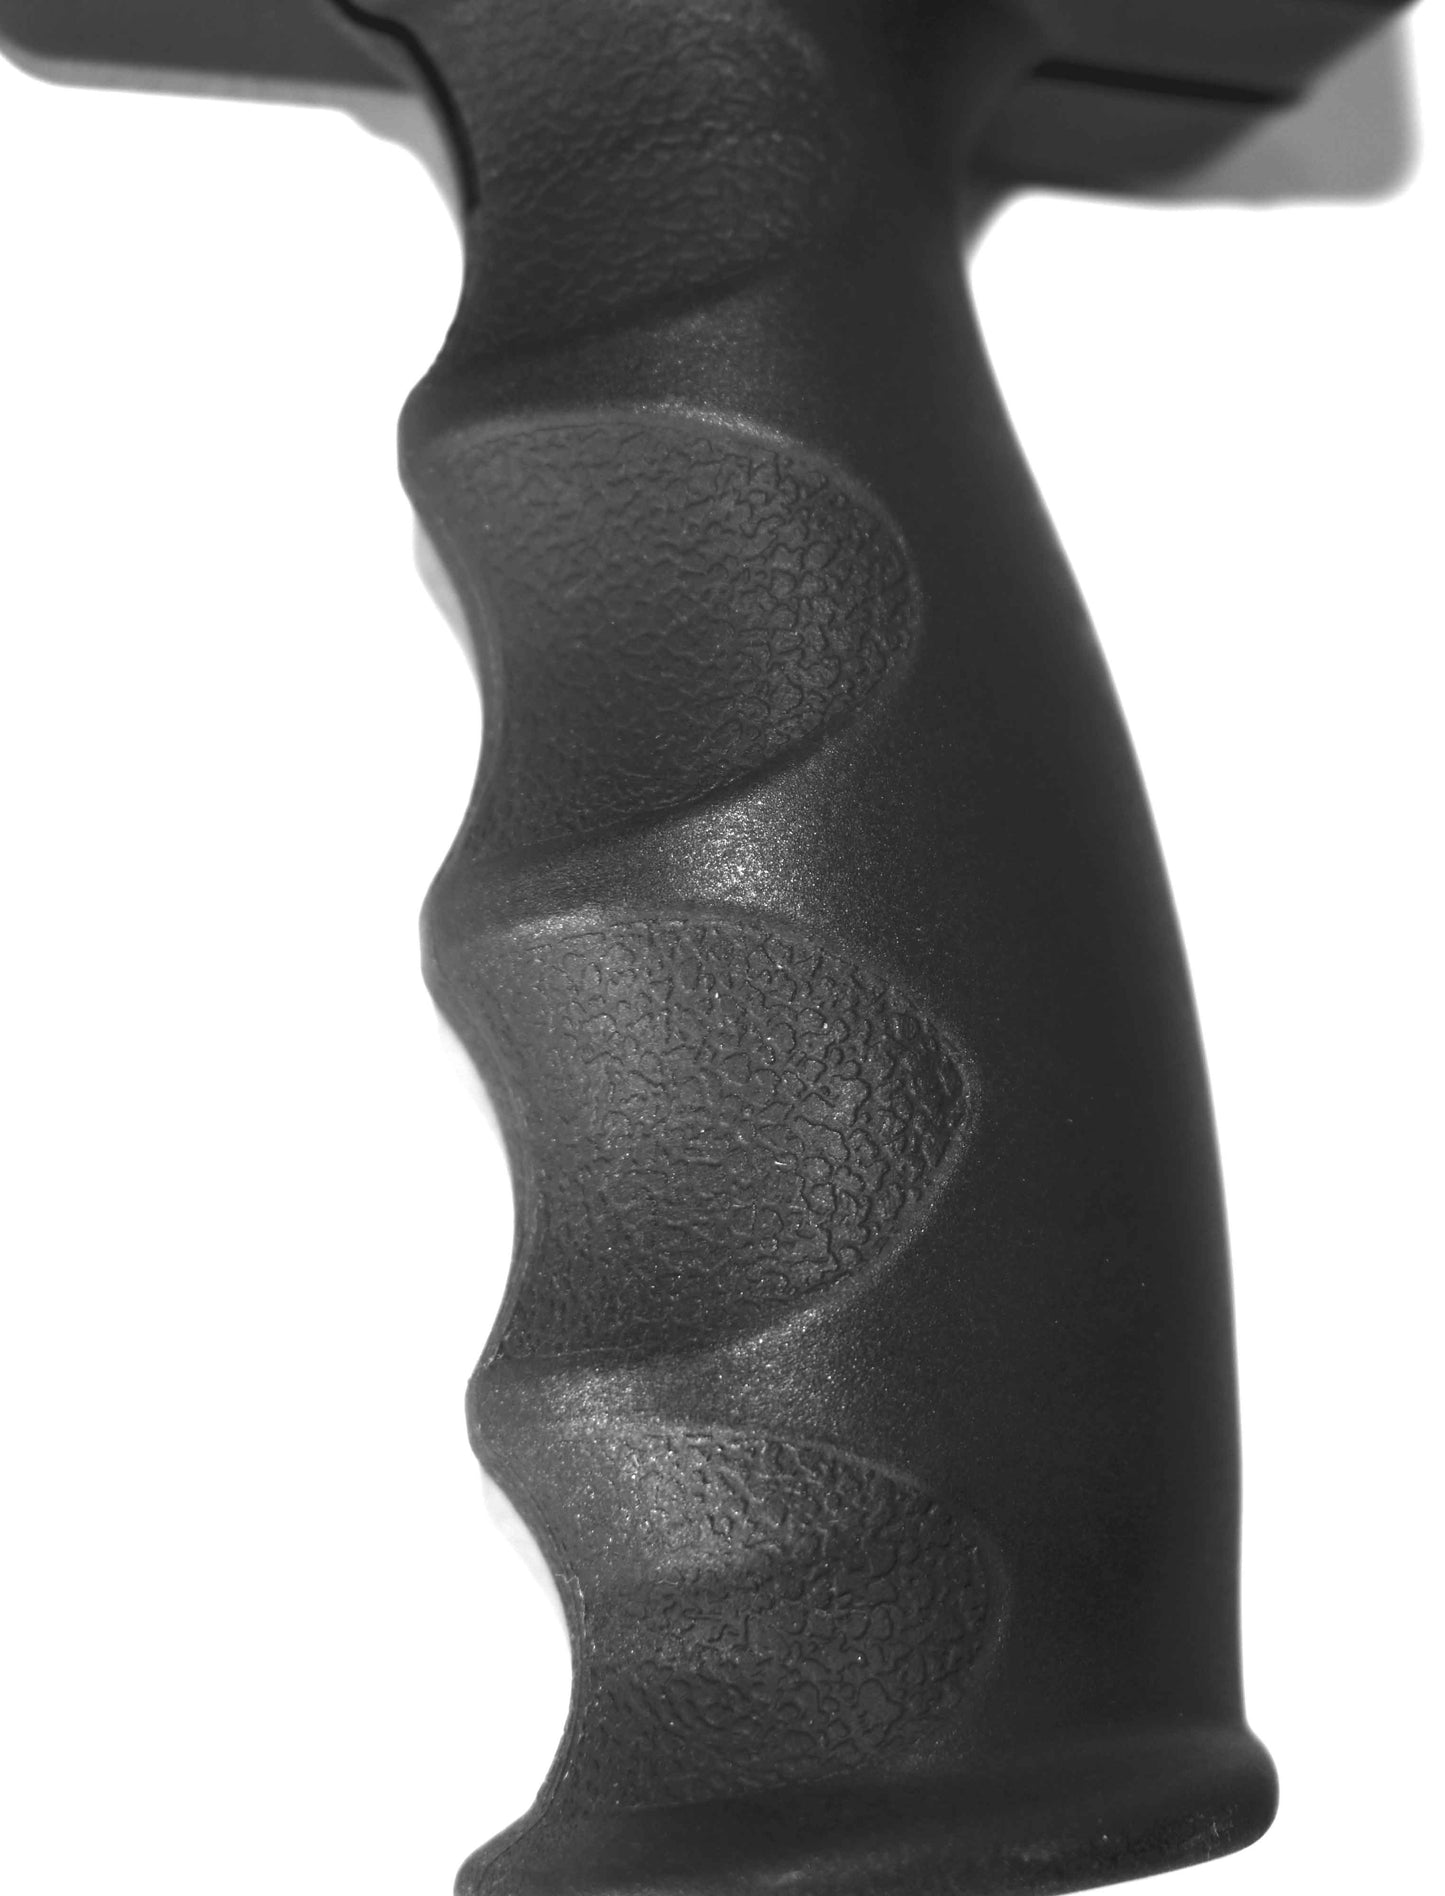 picatinny style grip for mossberg shotguns.